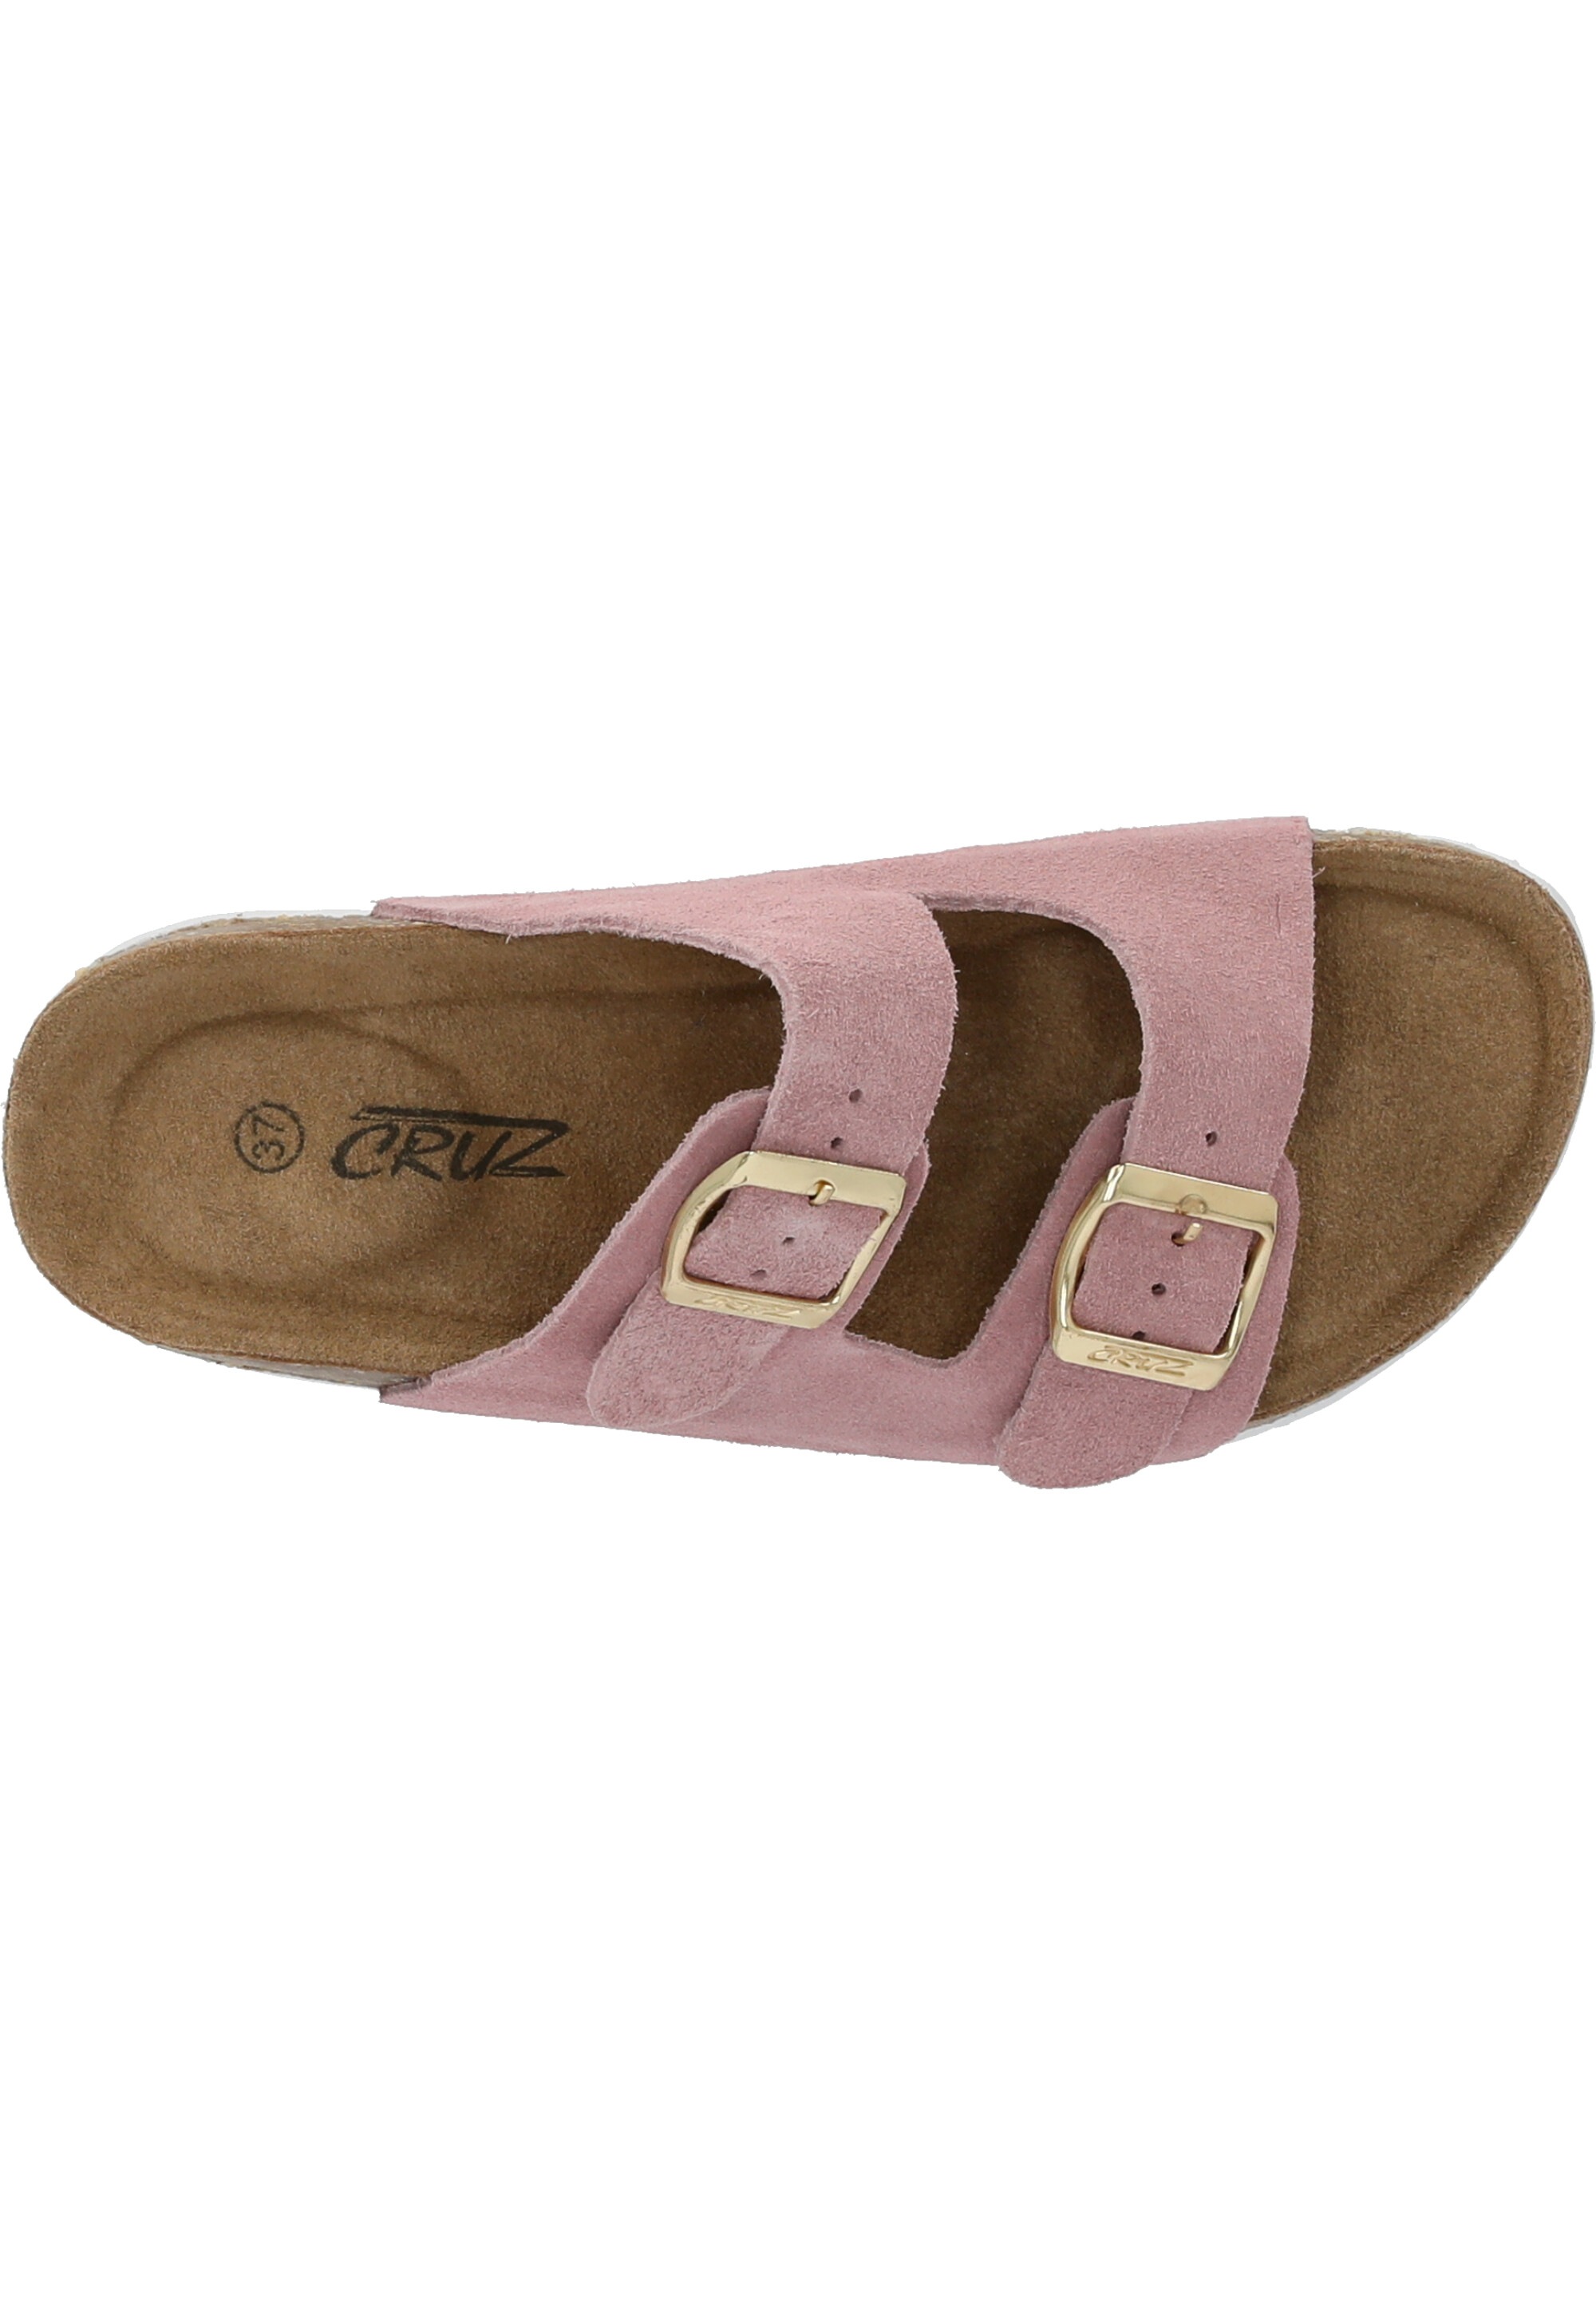 CRUZ Sandale »Bastar«, mit bequemem Komfort